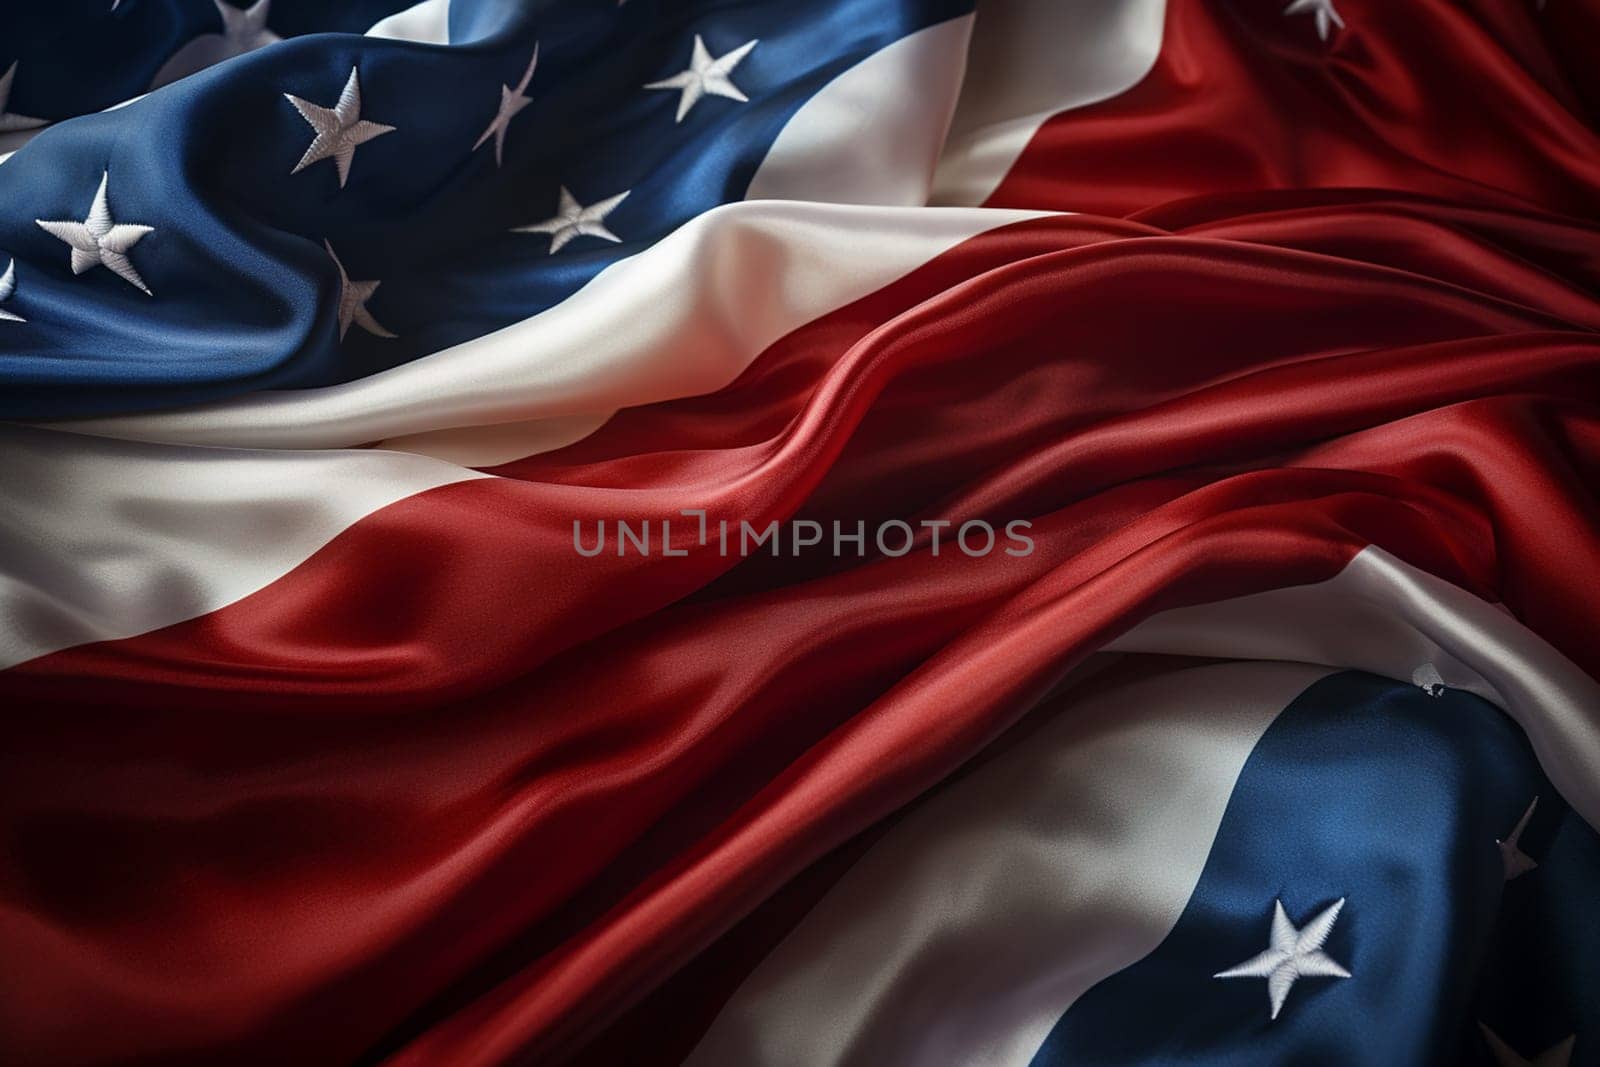 American flag of silk-3D illustration. High quality photo